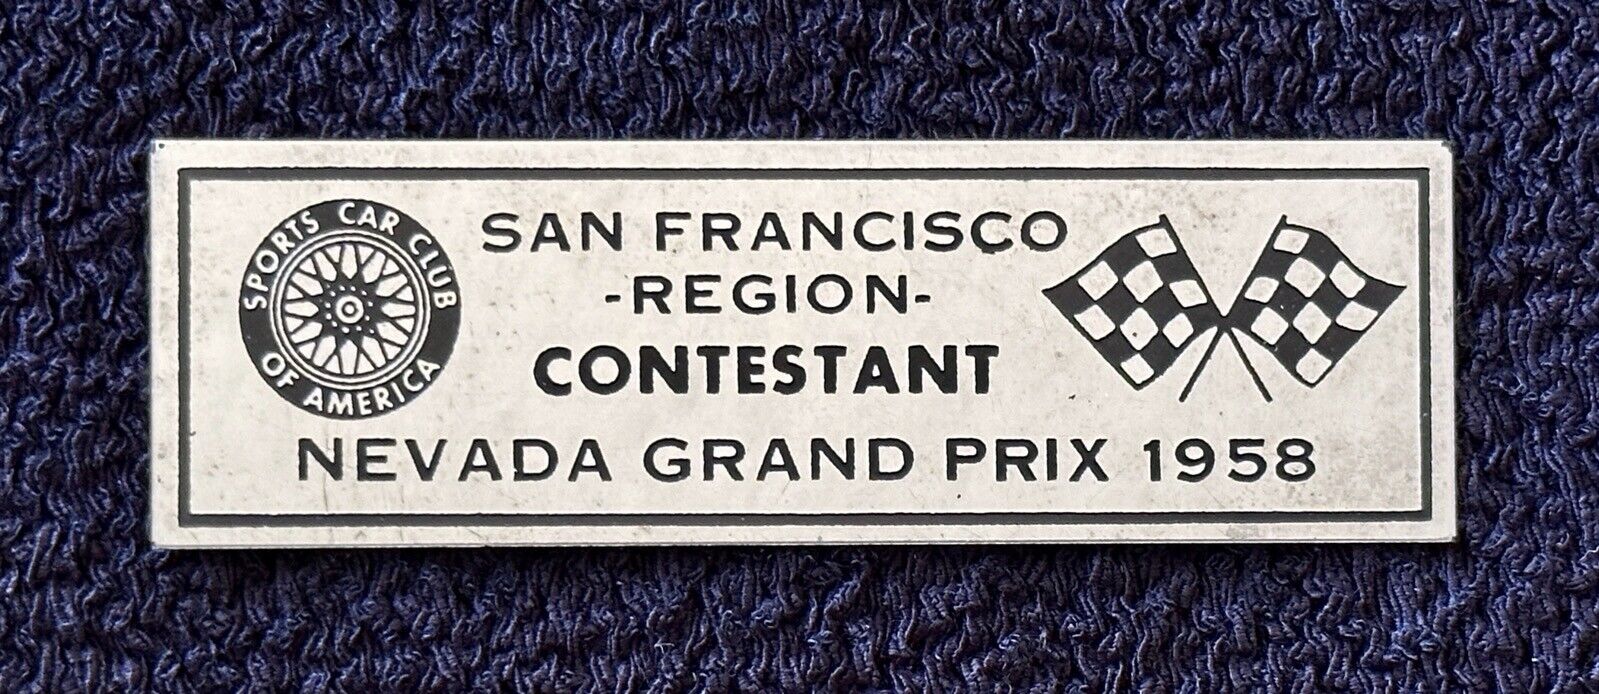 RARE 1958 Nevada Grand Prix SCCA Contestant Dash Plaque San Francisco Region